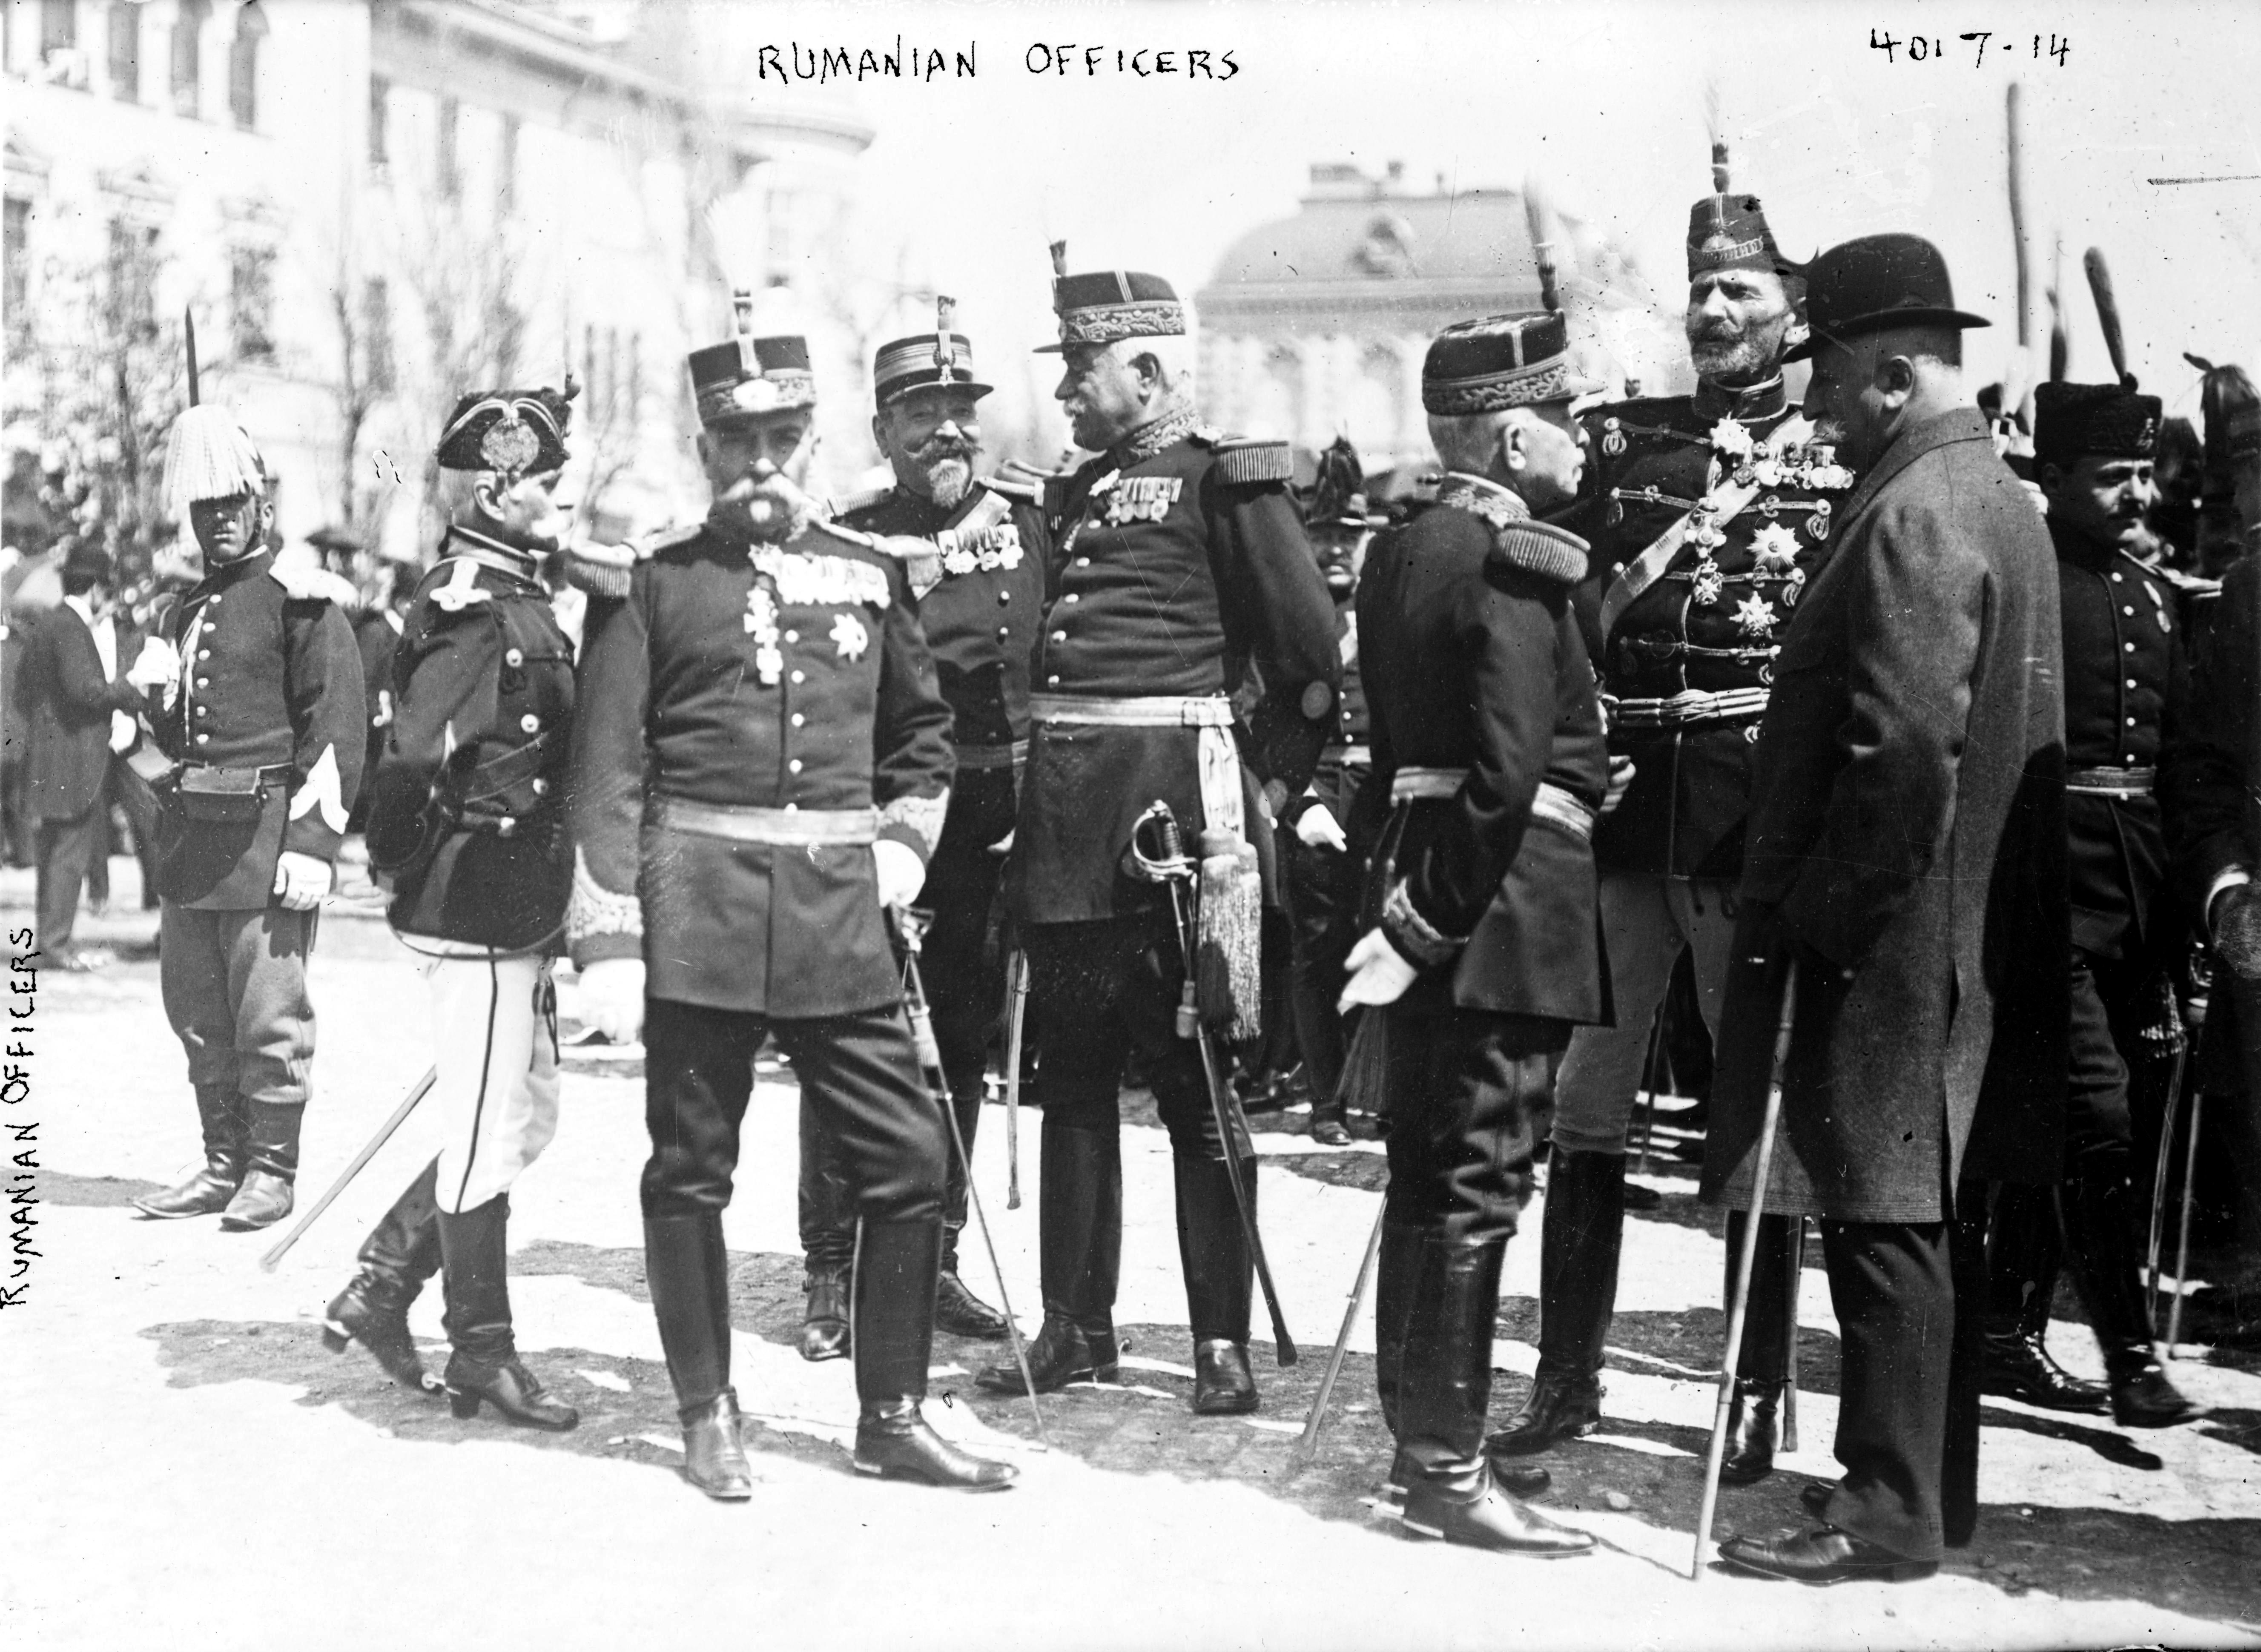 Romanian officers, ready for war, summer 1916.